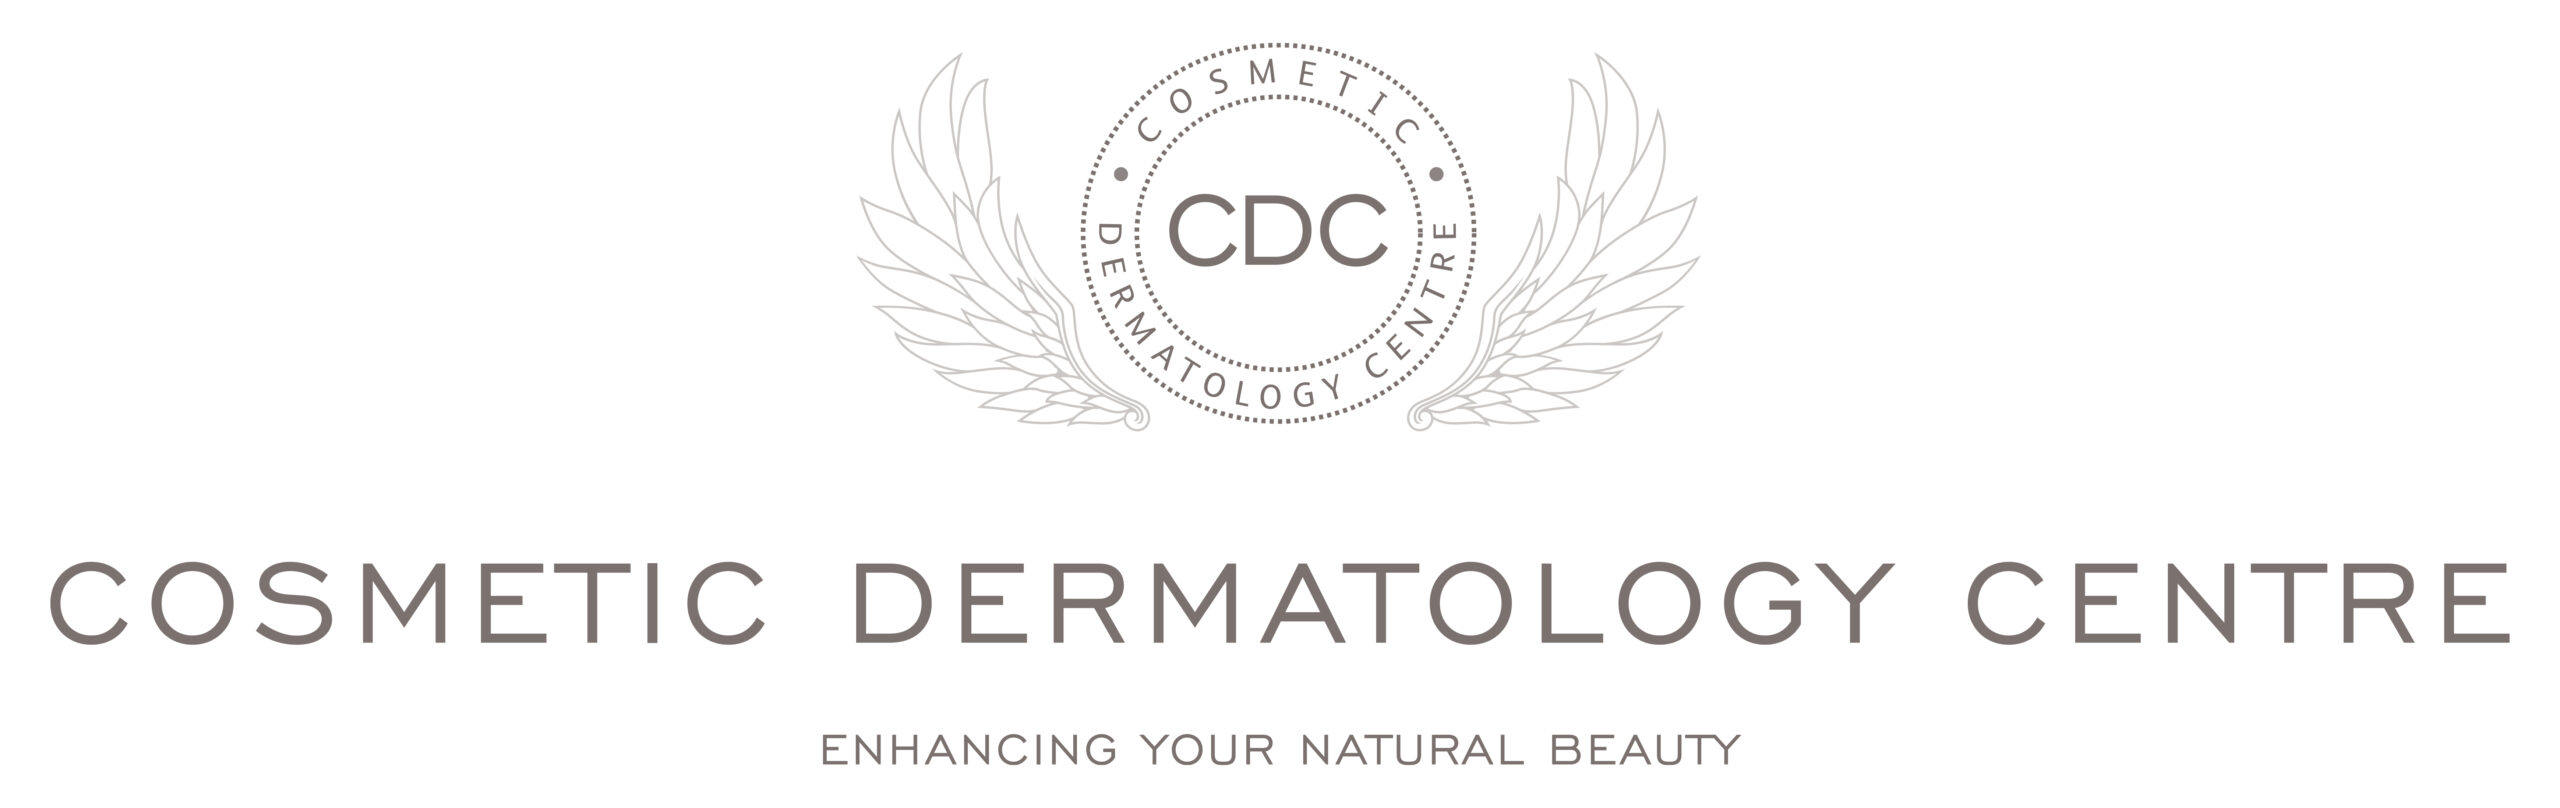 Cosmetic Dermatology Centre logo